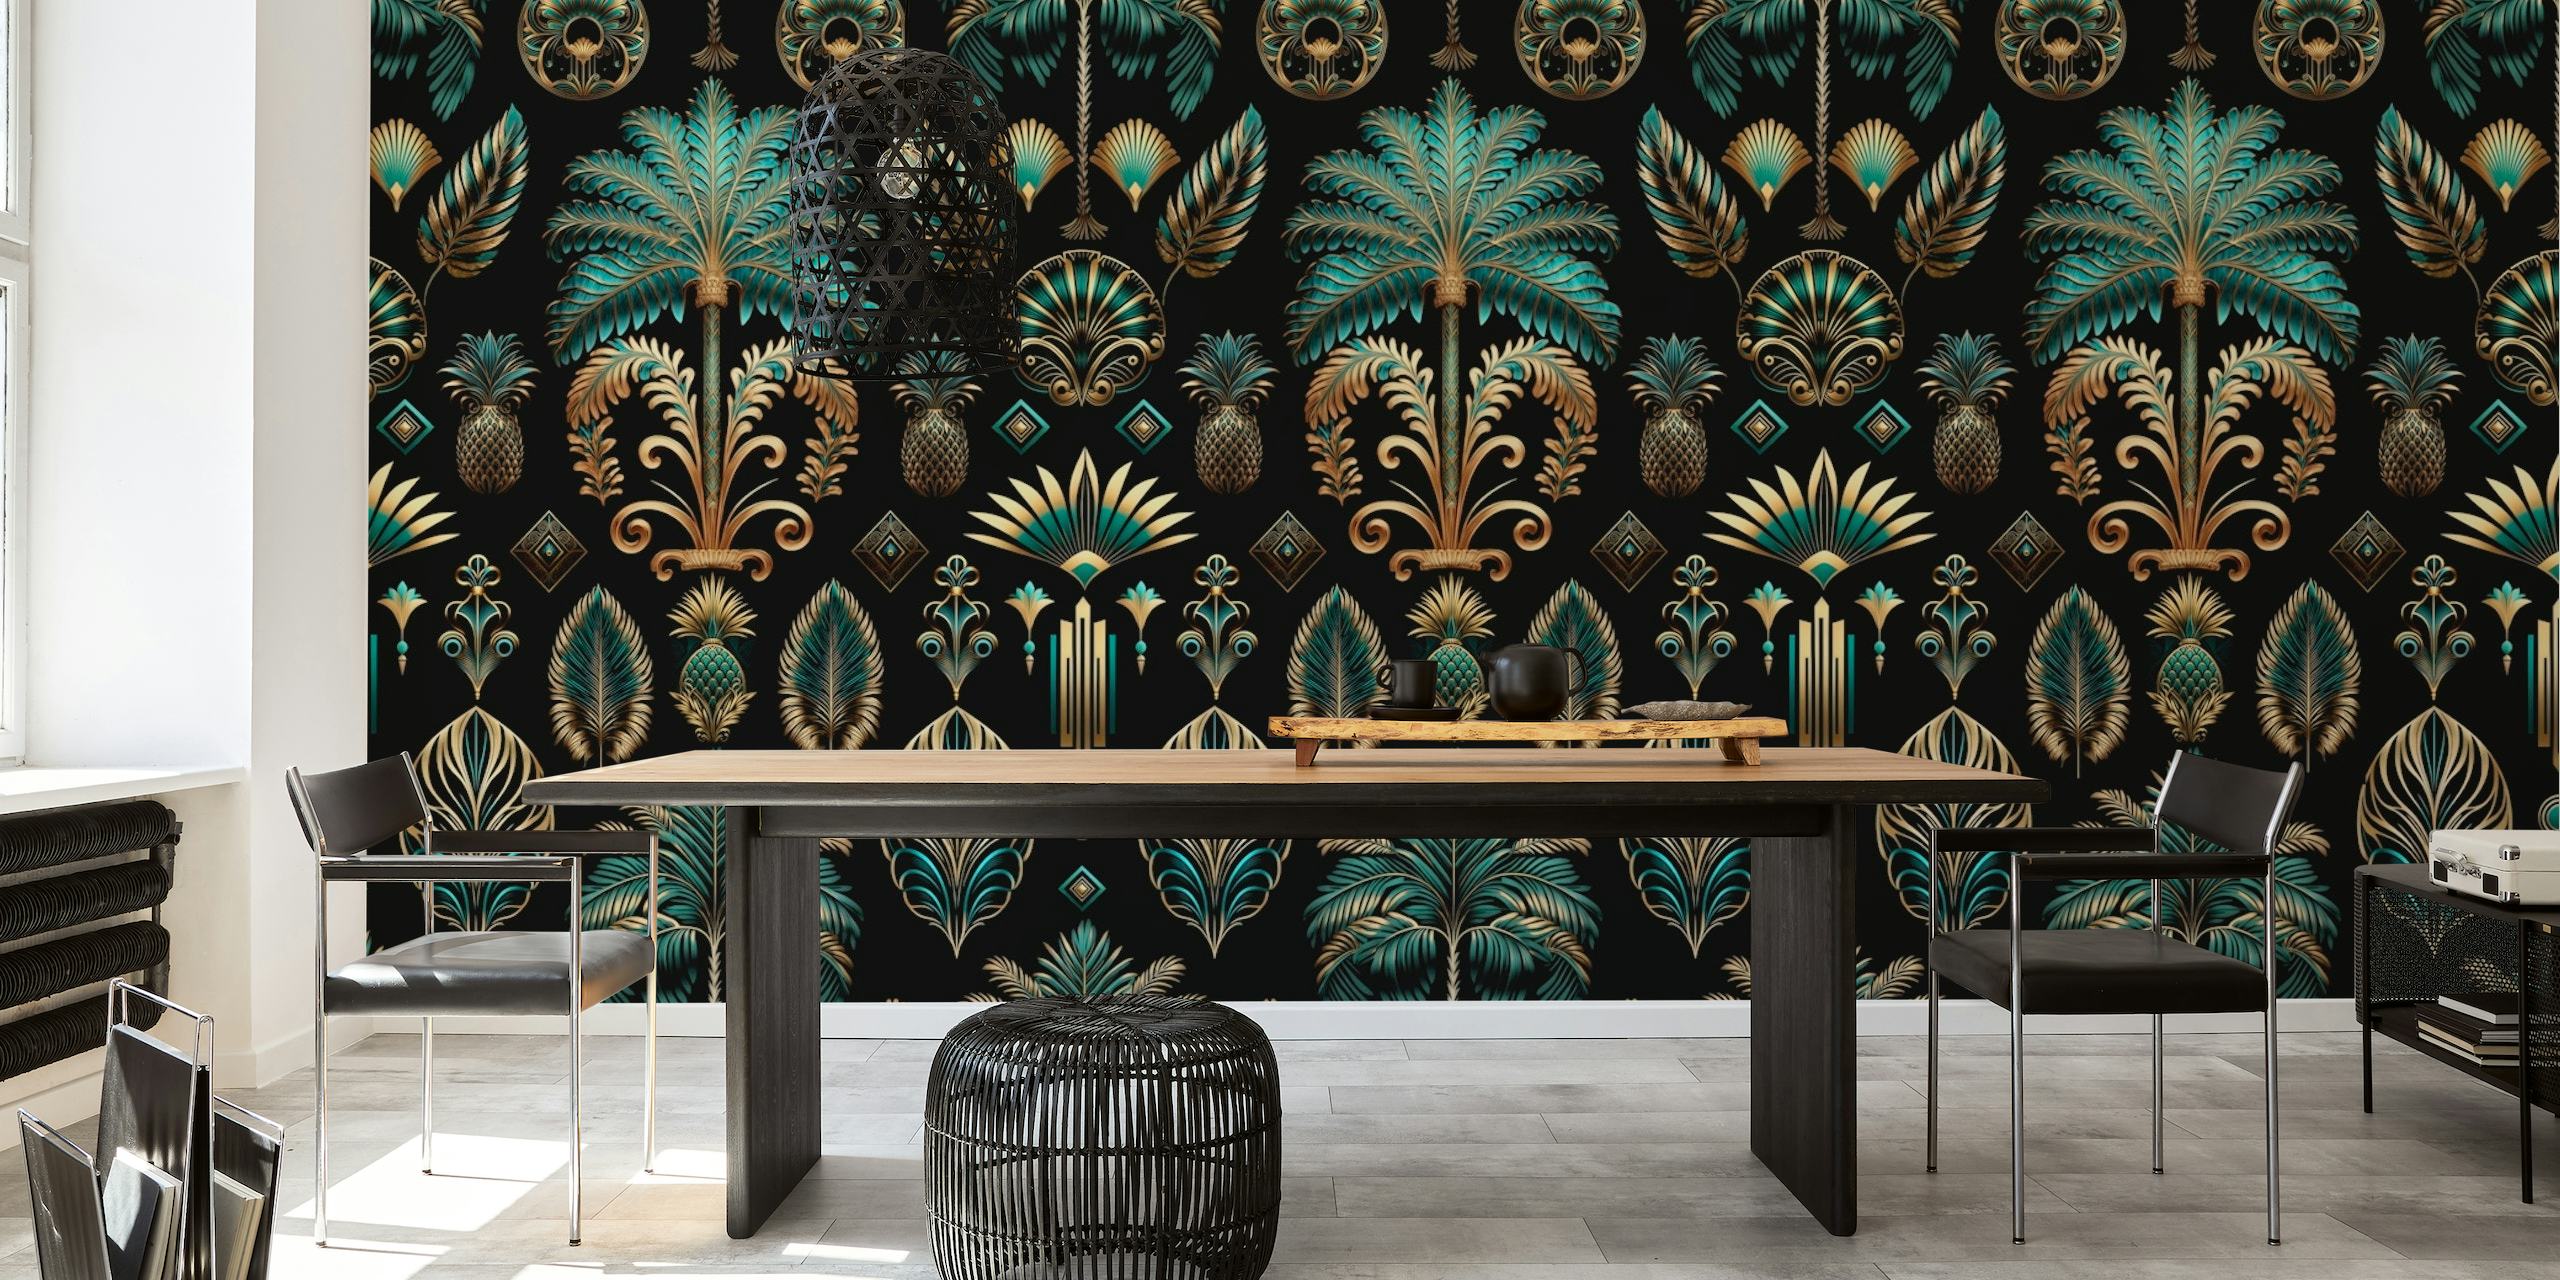 Exquisite Art Deco Palm Trees wallpaper